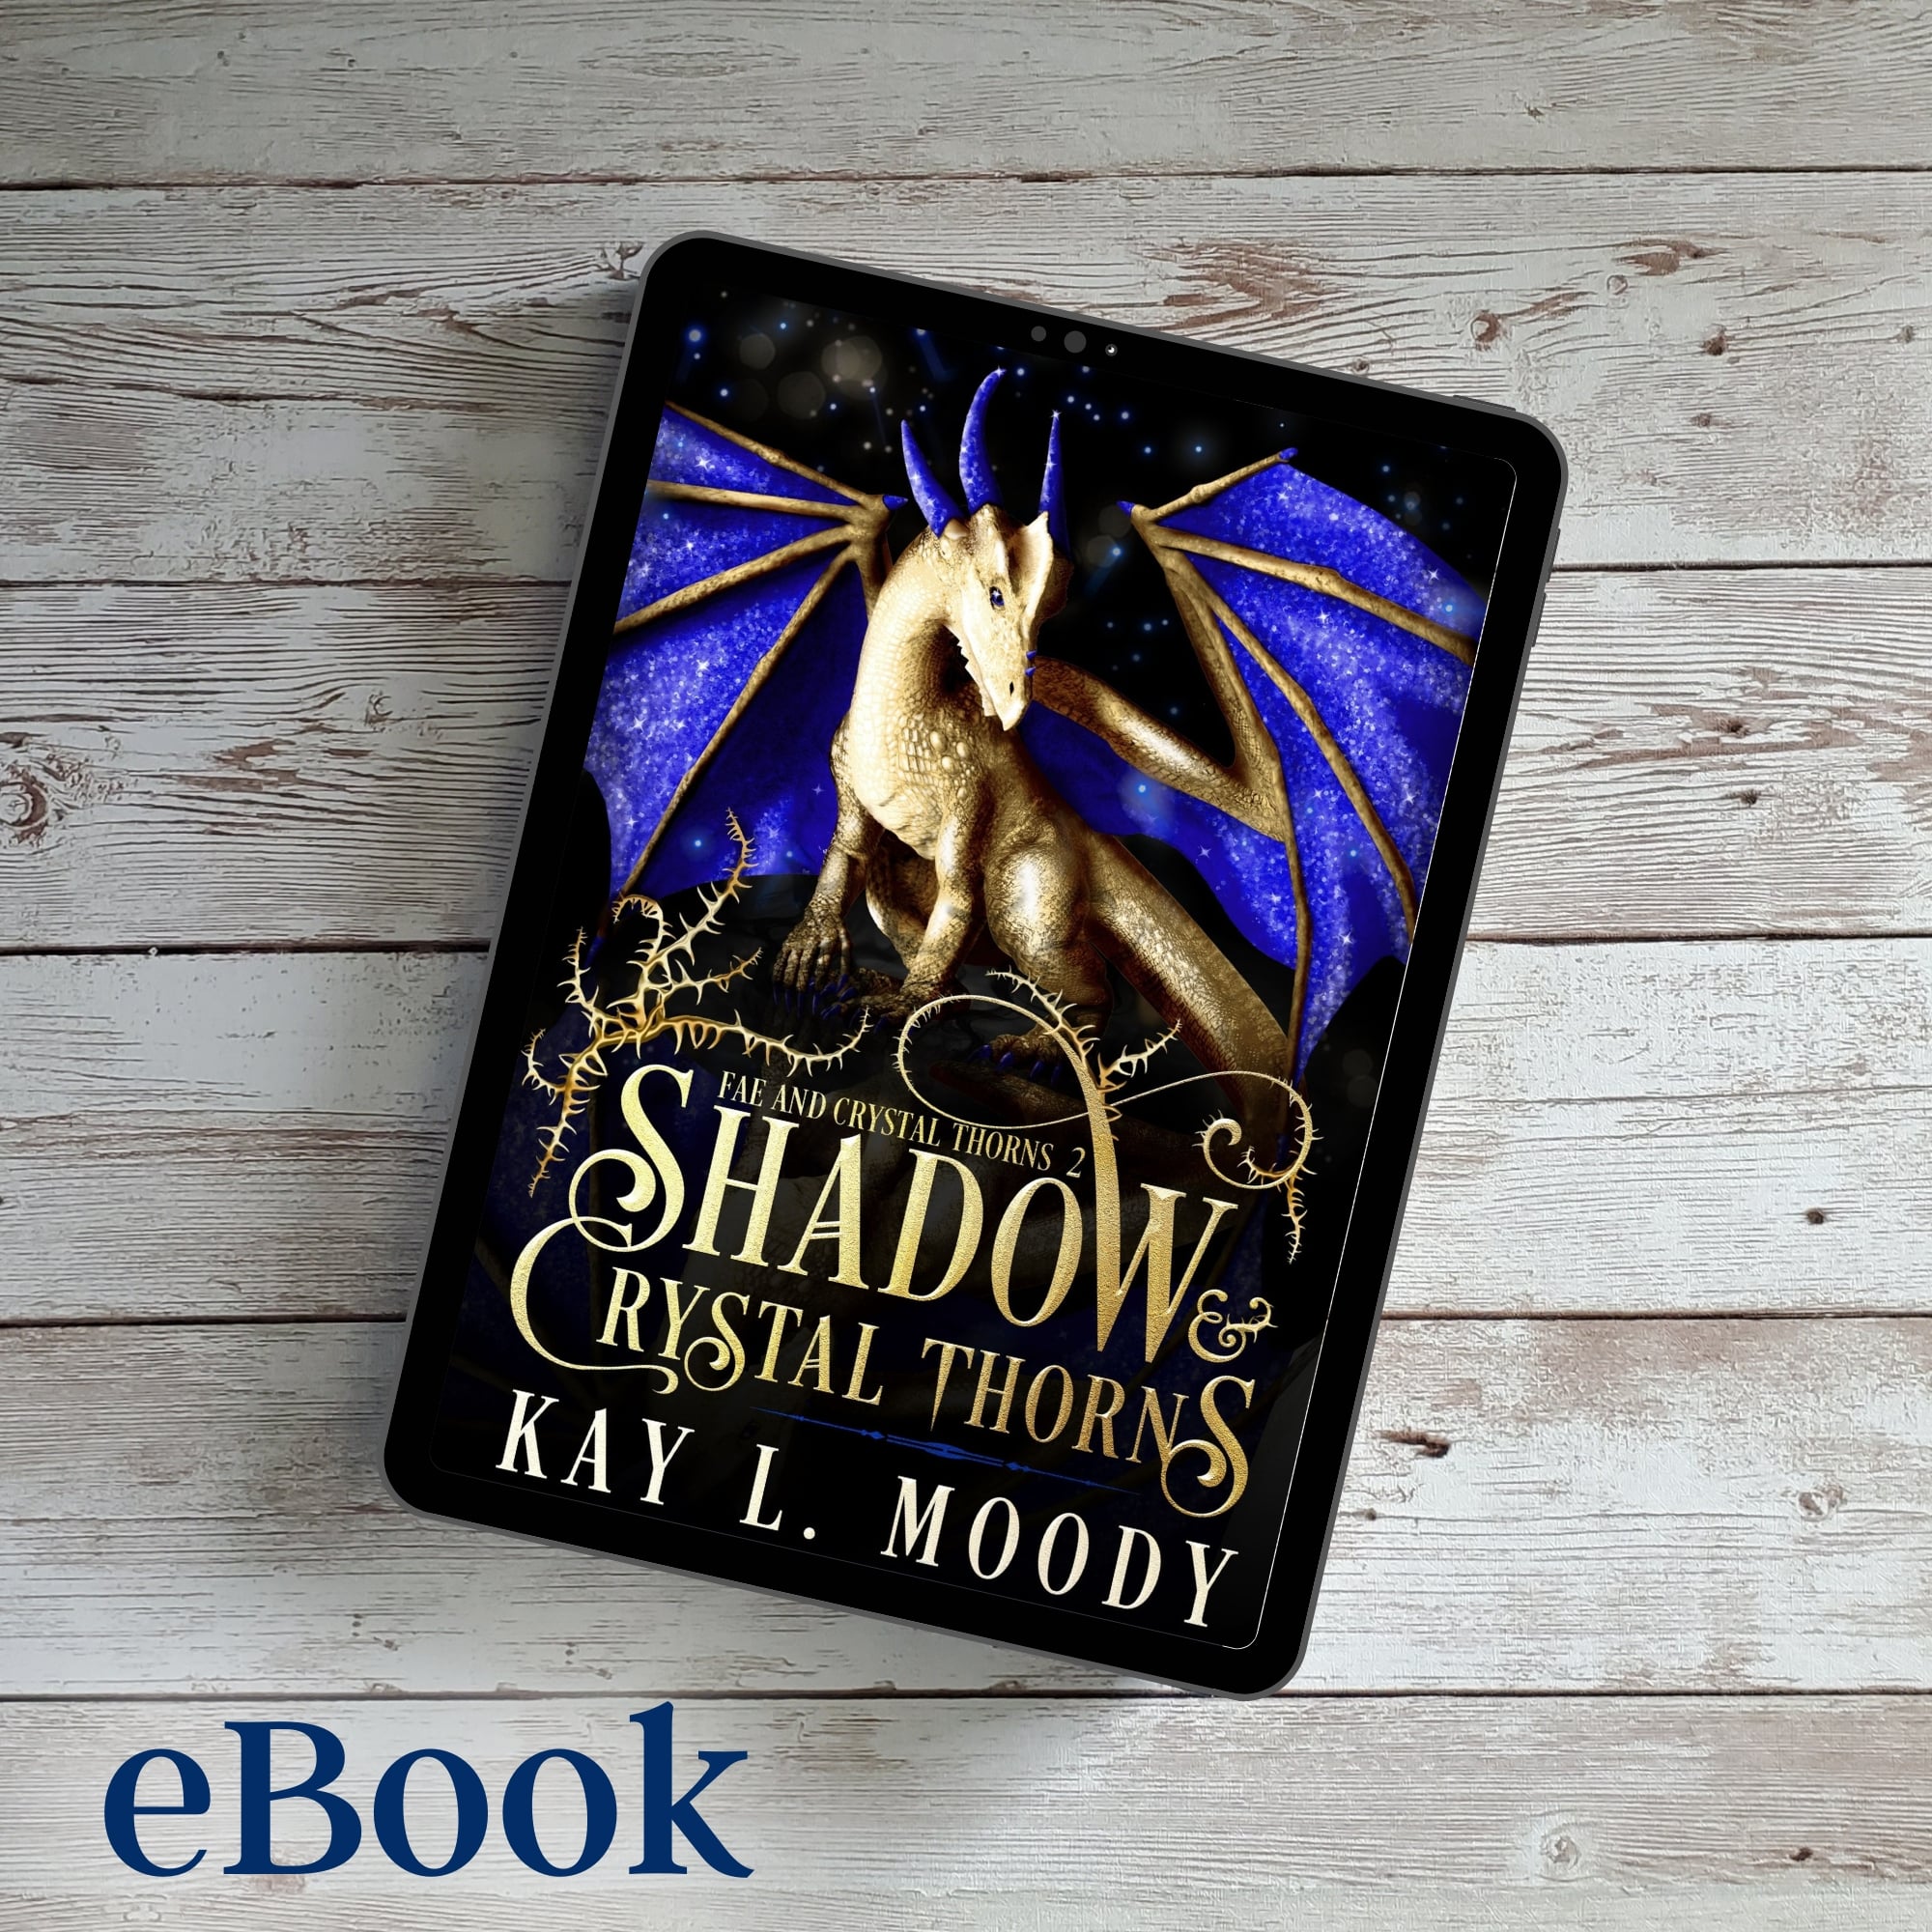 Shadow and Crystal Thorns (eBook)